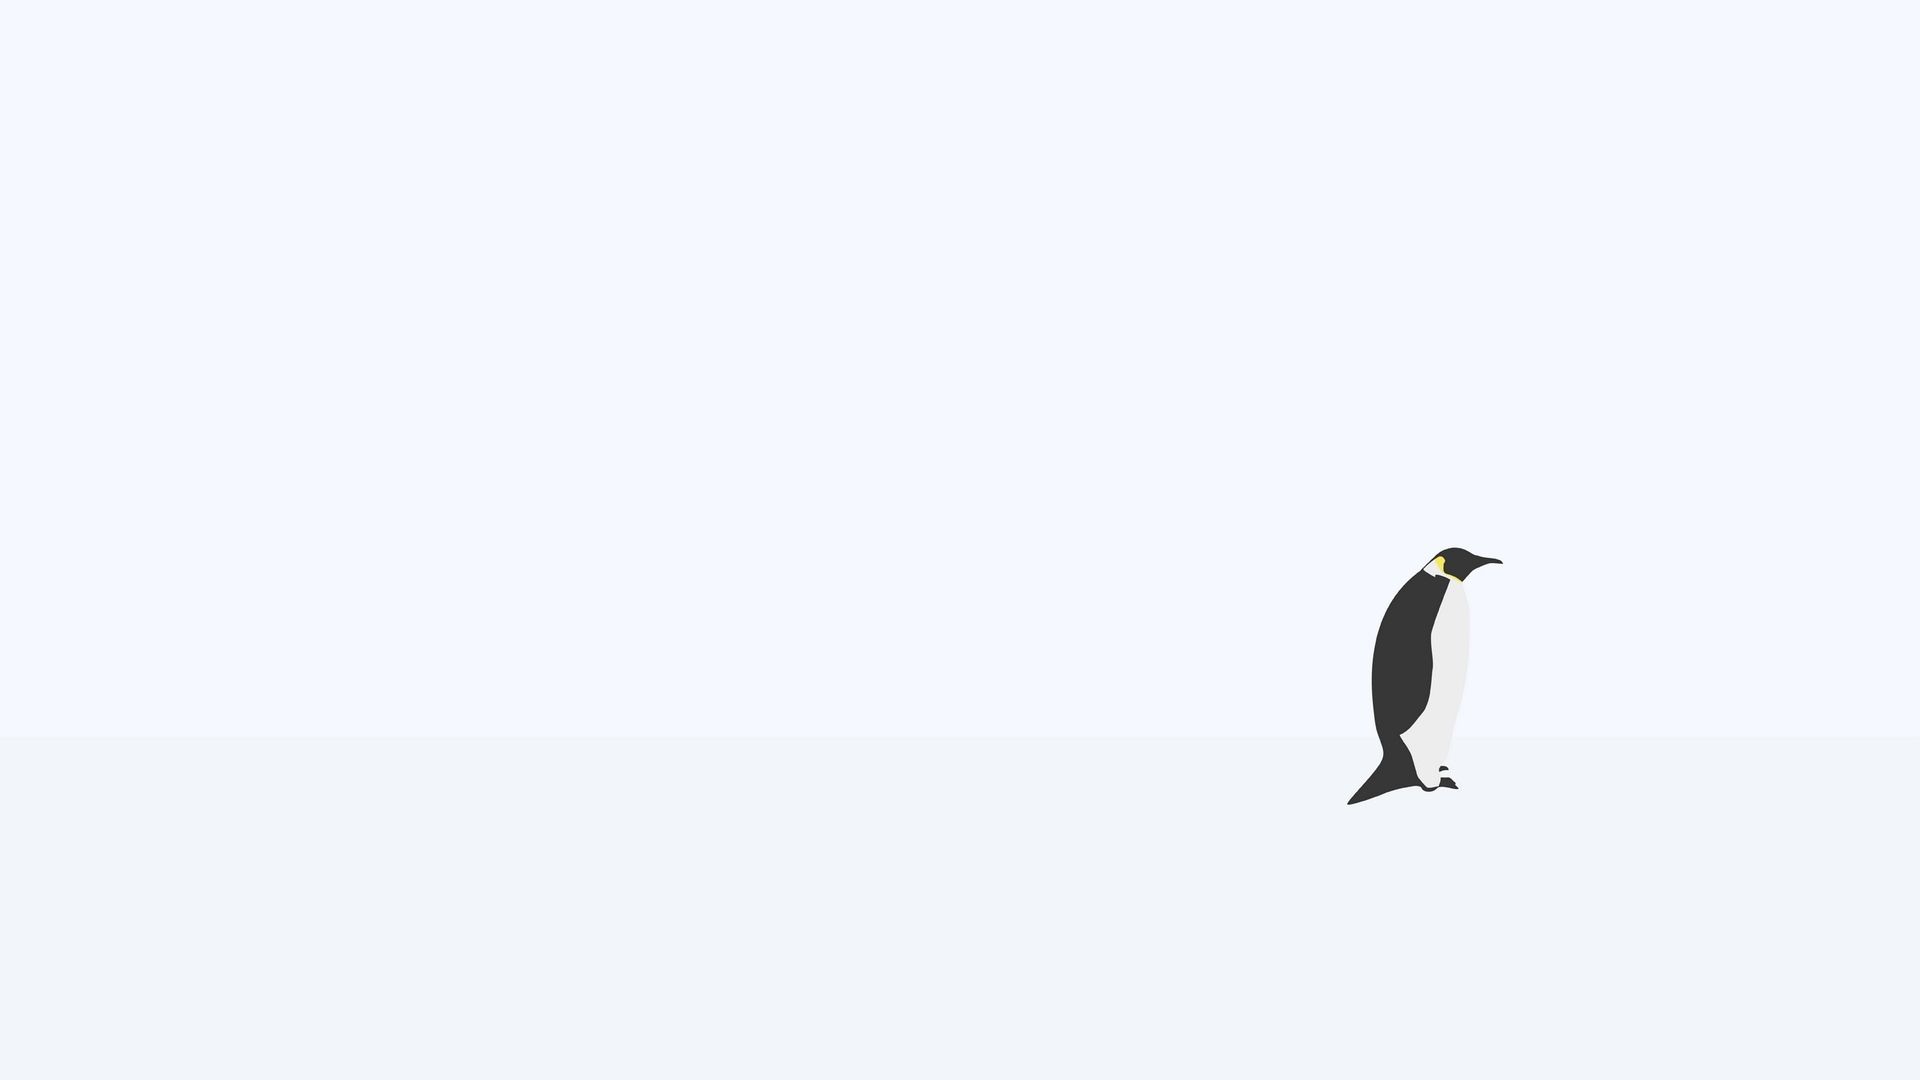 Minimalist Penguin Wallpaper